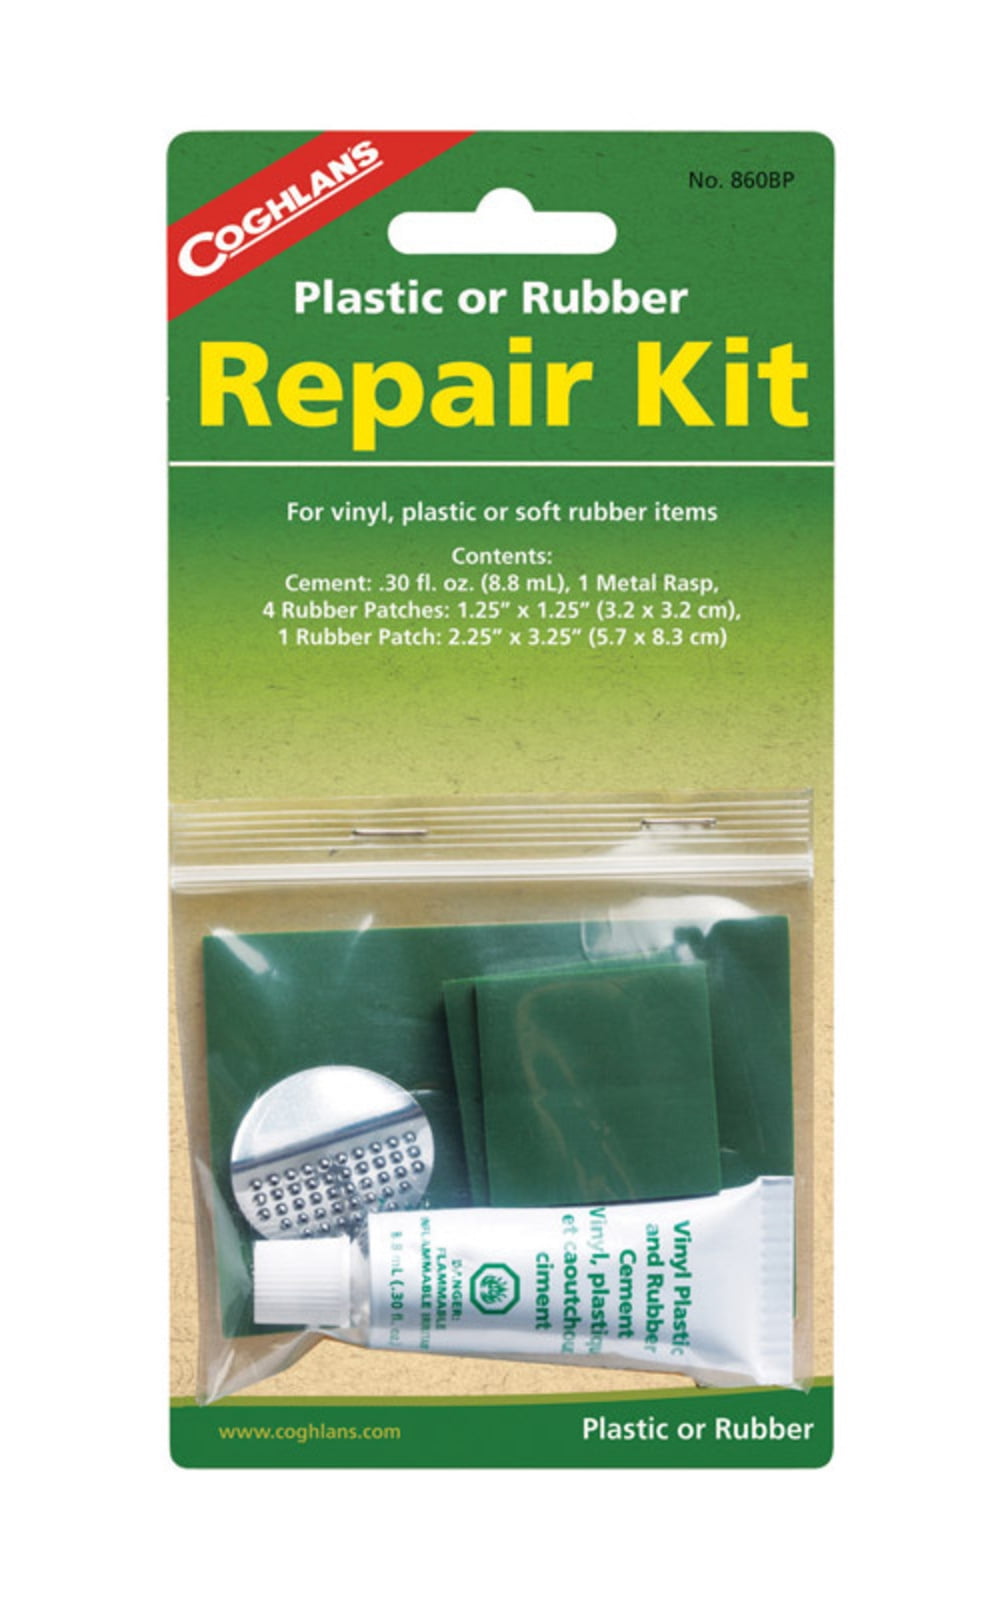 Air Mattress Repair Kit - Brand Manufacturing